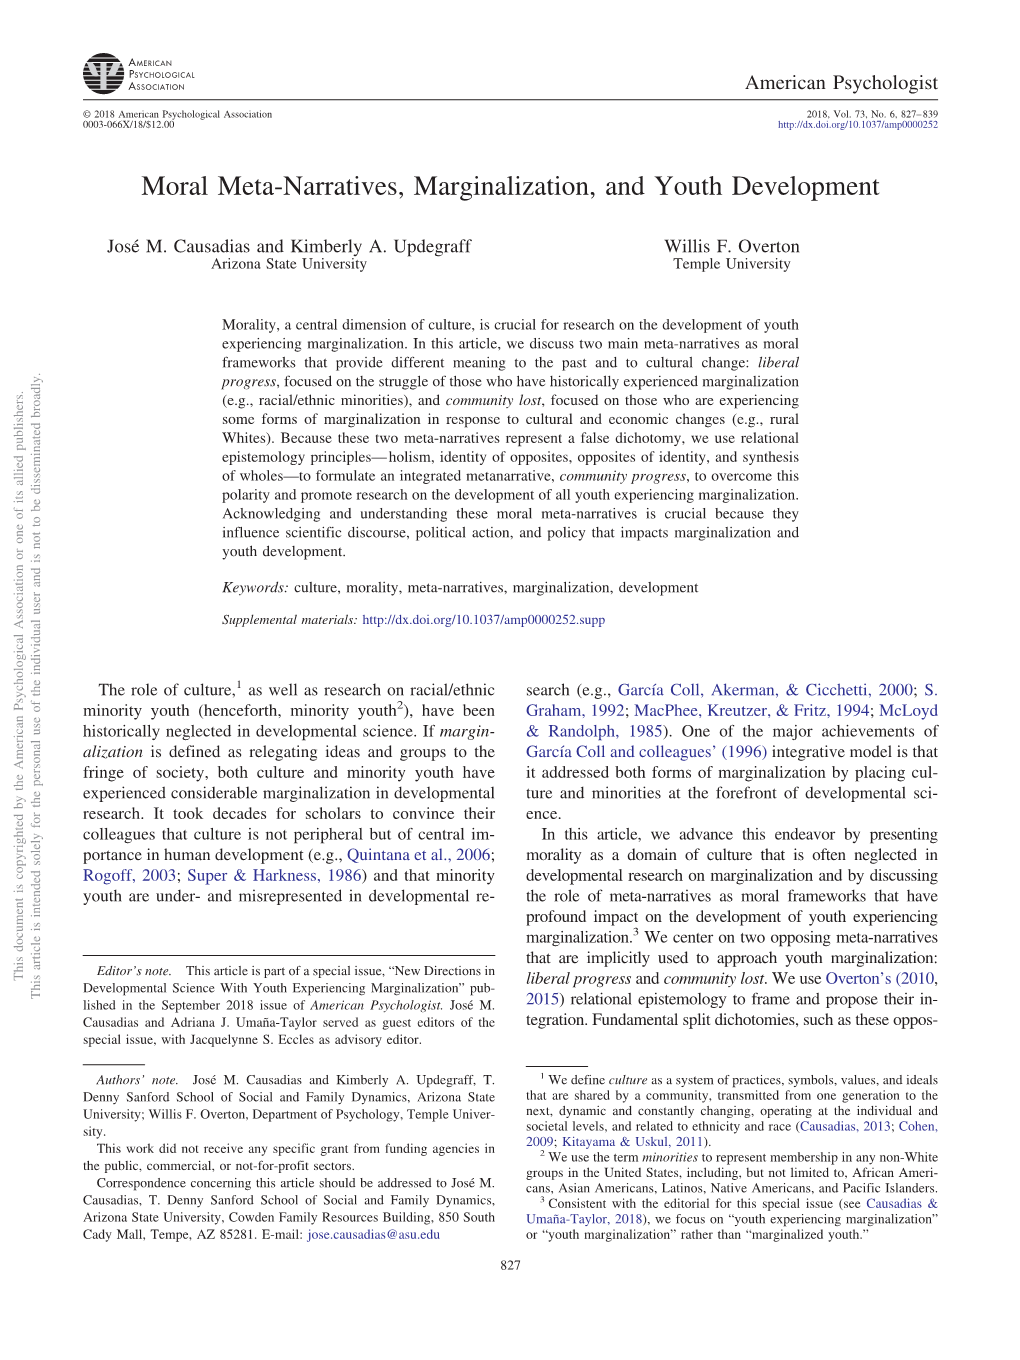 Moral Meta-Narratives, Marginalization, and Youth Development